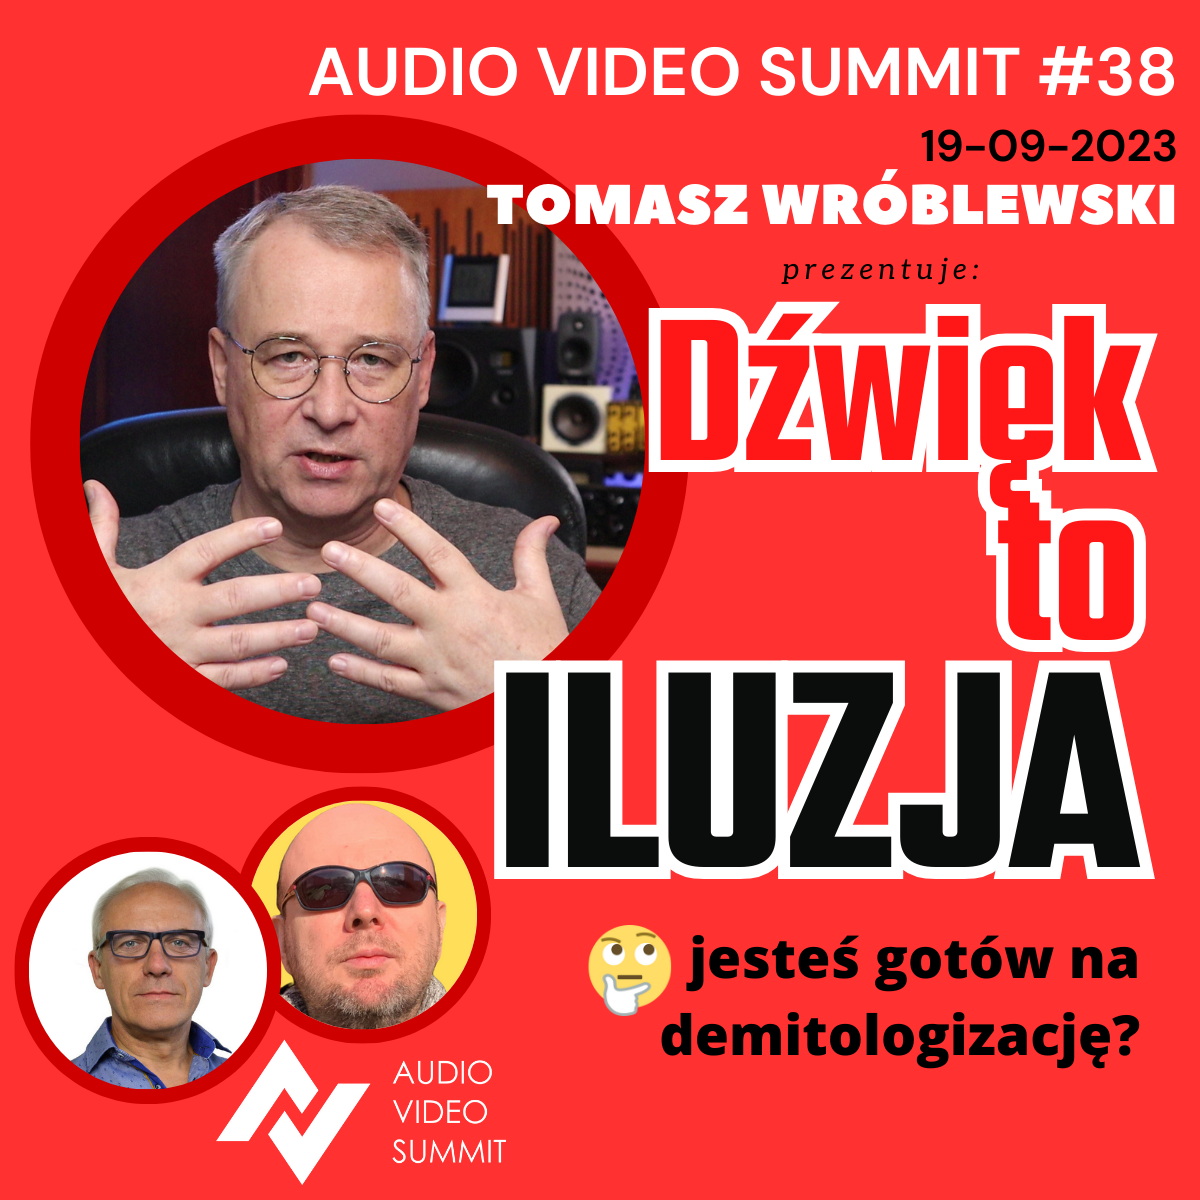 Audio Video Summit #38: TOMASZ WRÓBLEWSKI: Dźwięk to iluzja